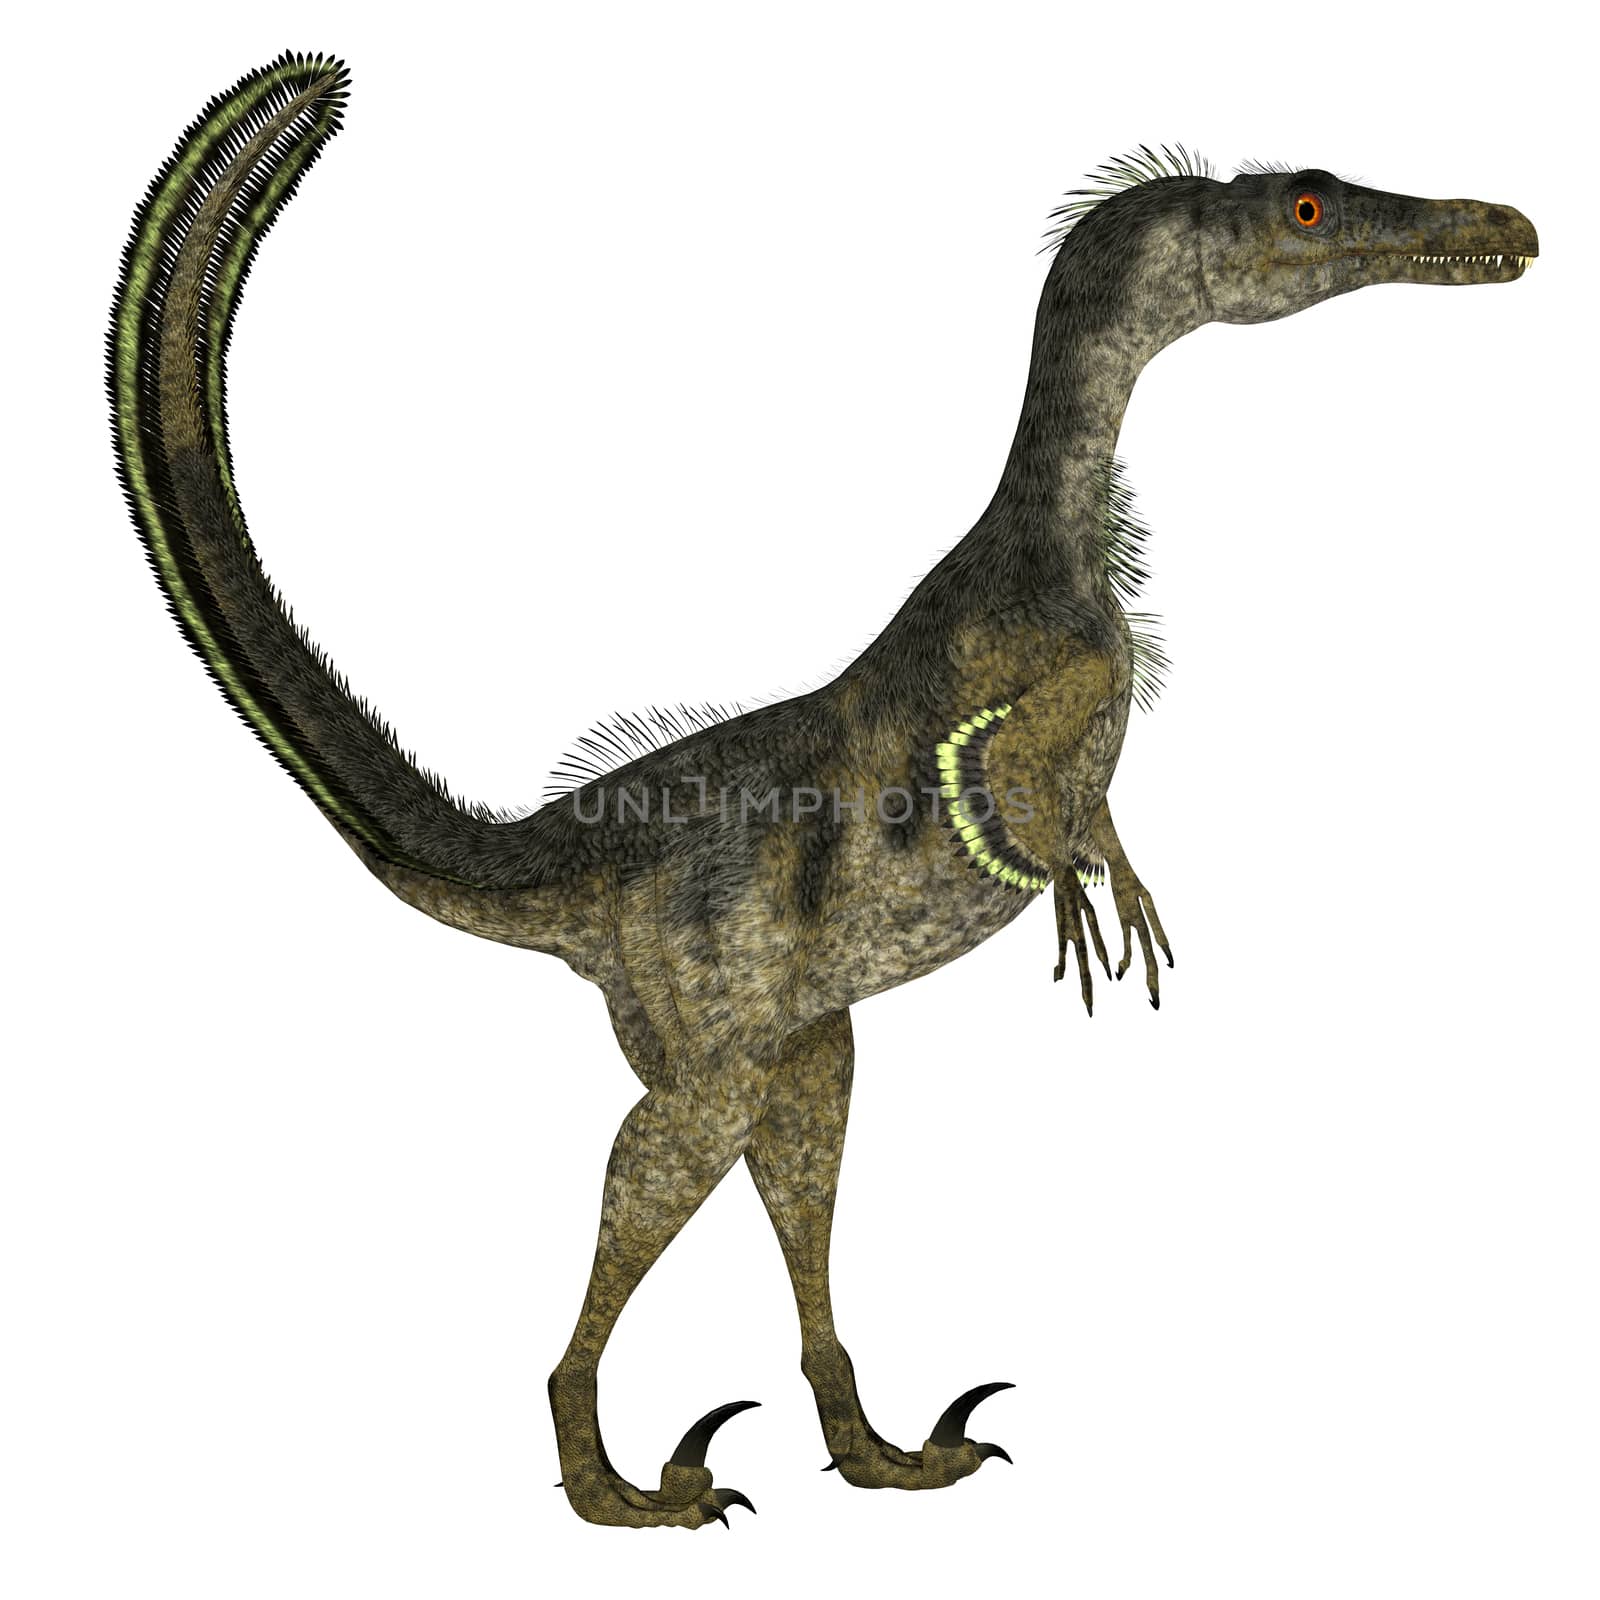 Velociraptor Dinosaur Side Profile by Catmando